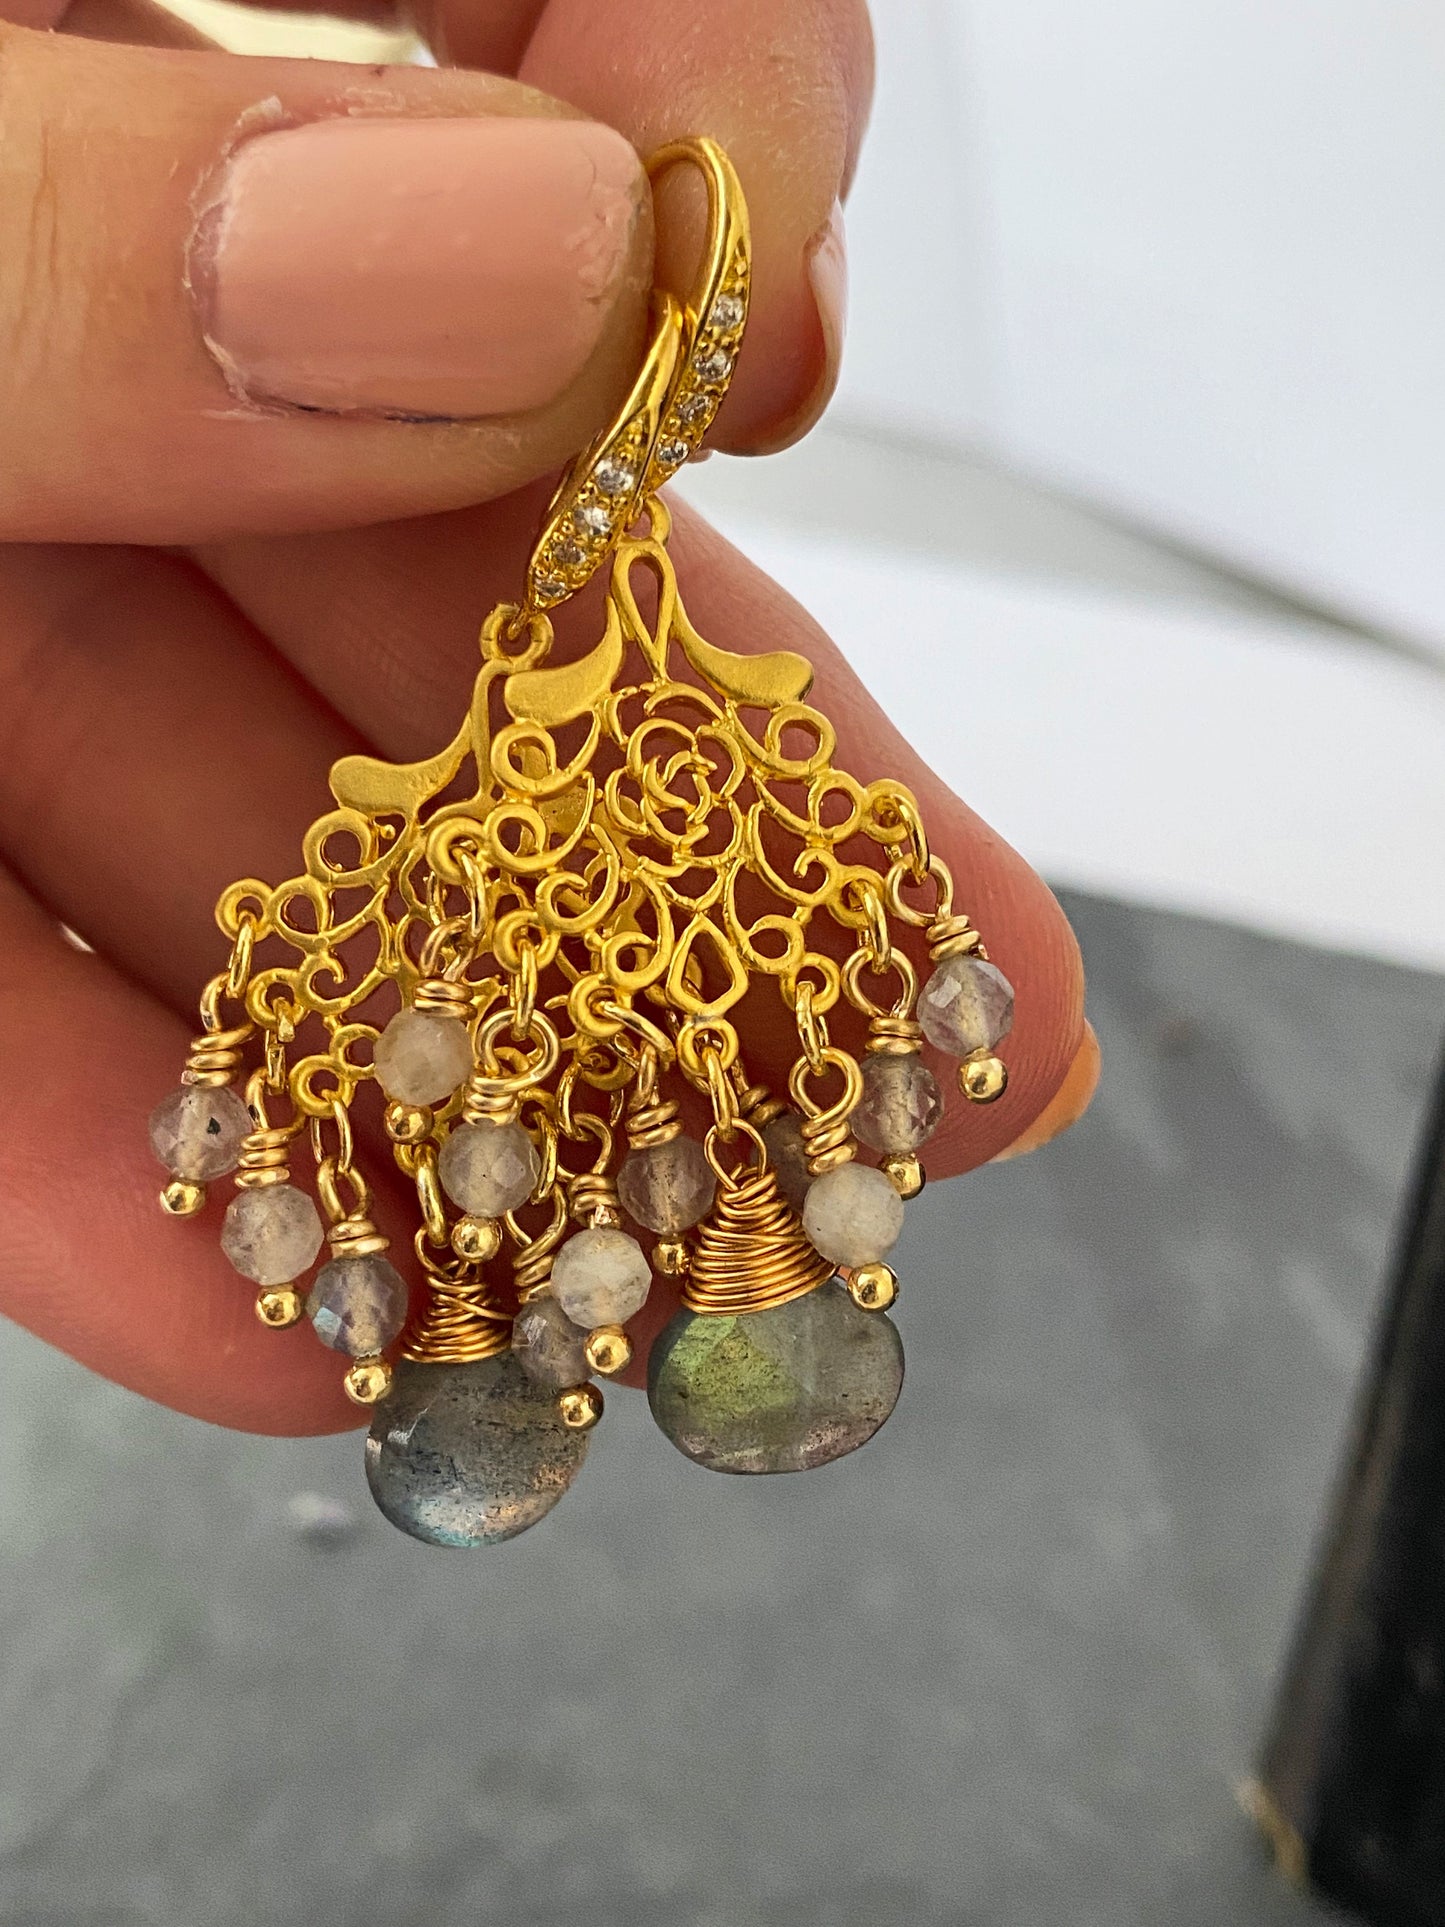 Labradorite gemstone, gold metal earrings,  chandelier, jewelry - Andria Bieber Designs 